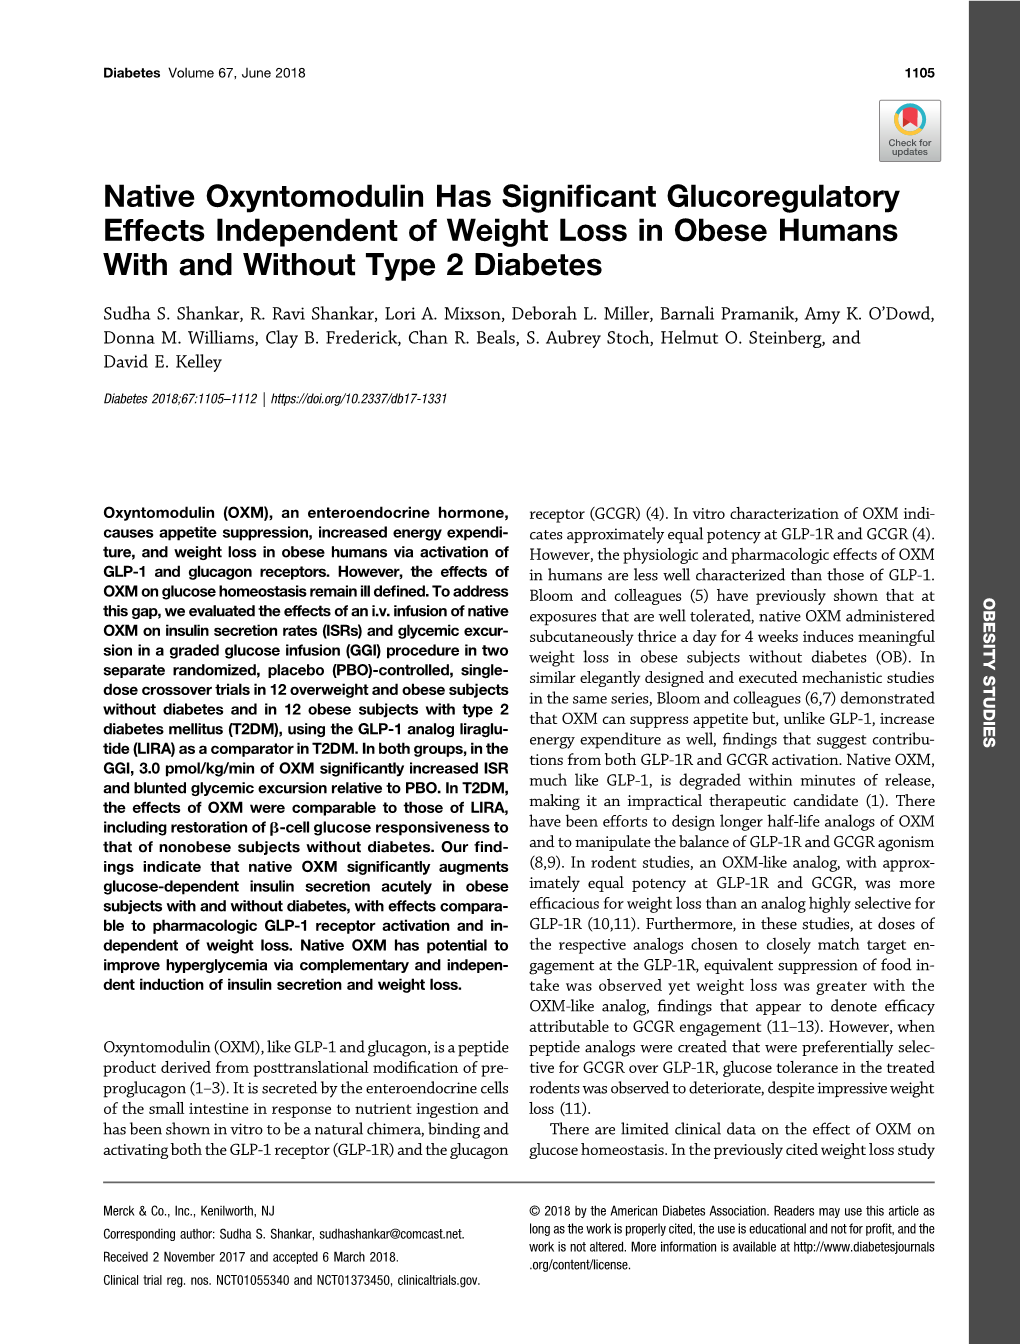 Native Oxyntomodulin Has Significant Glucoregulatory Effects